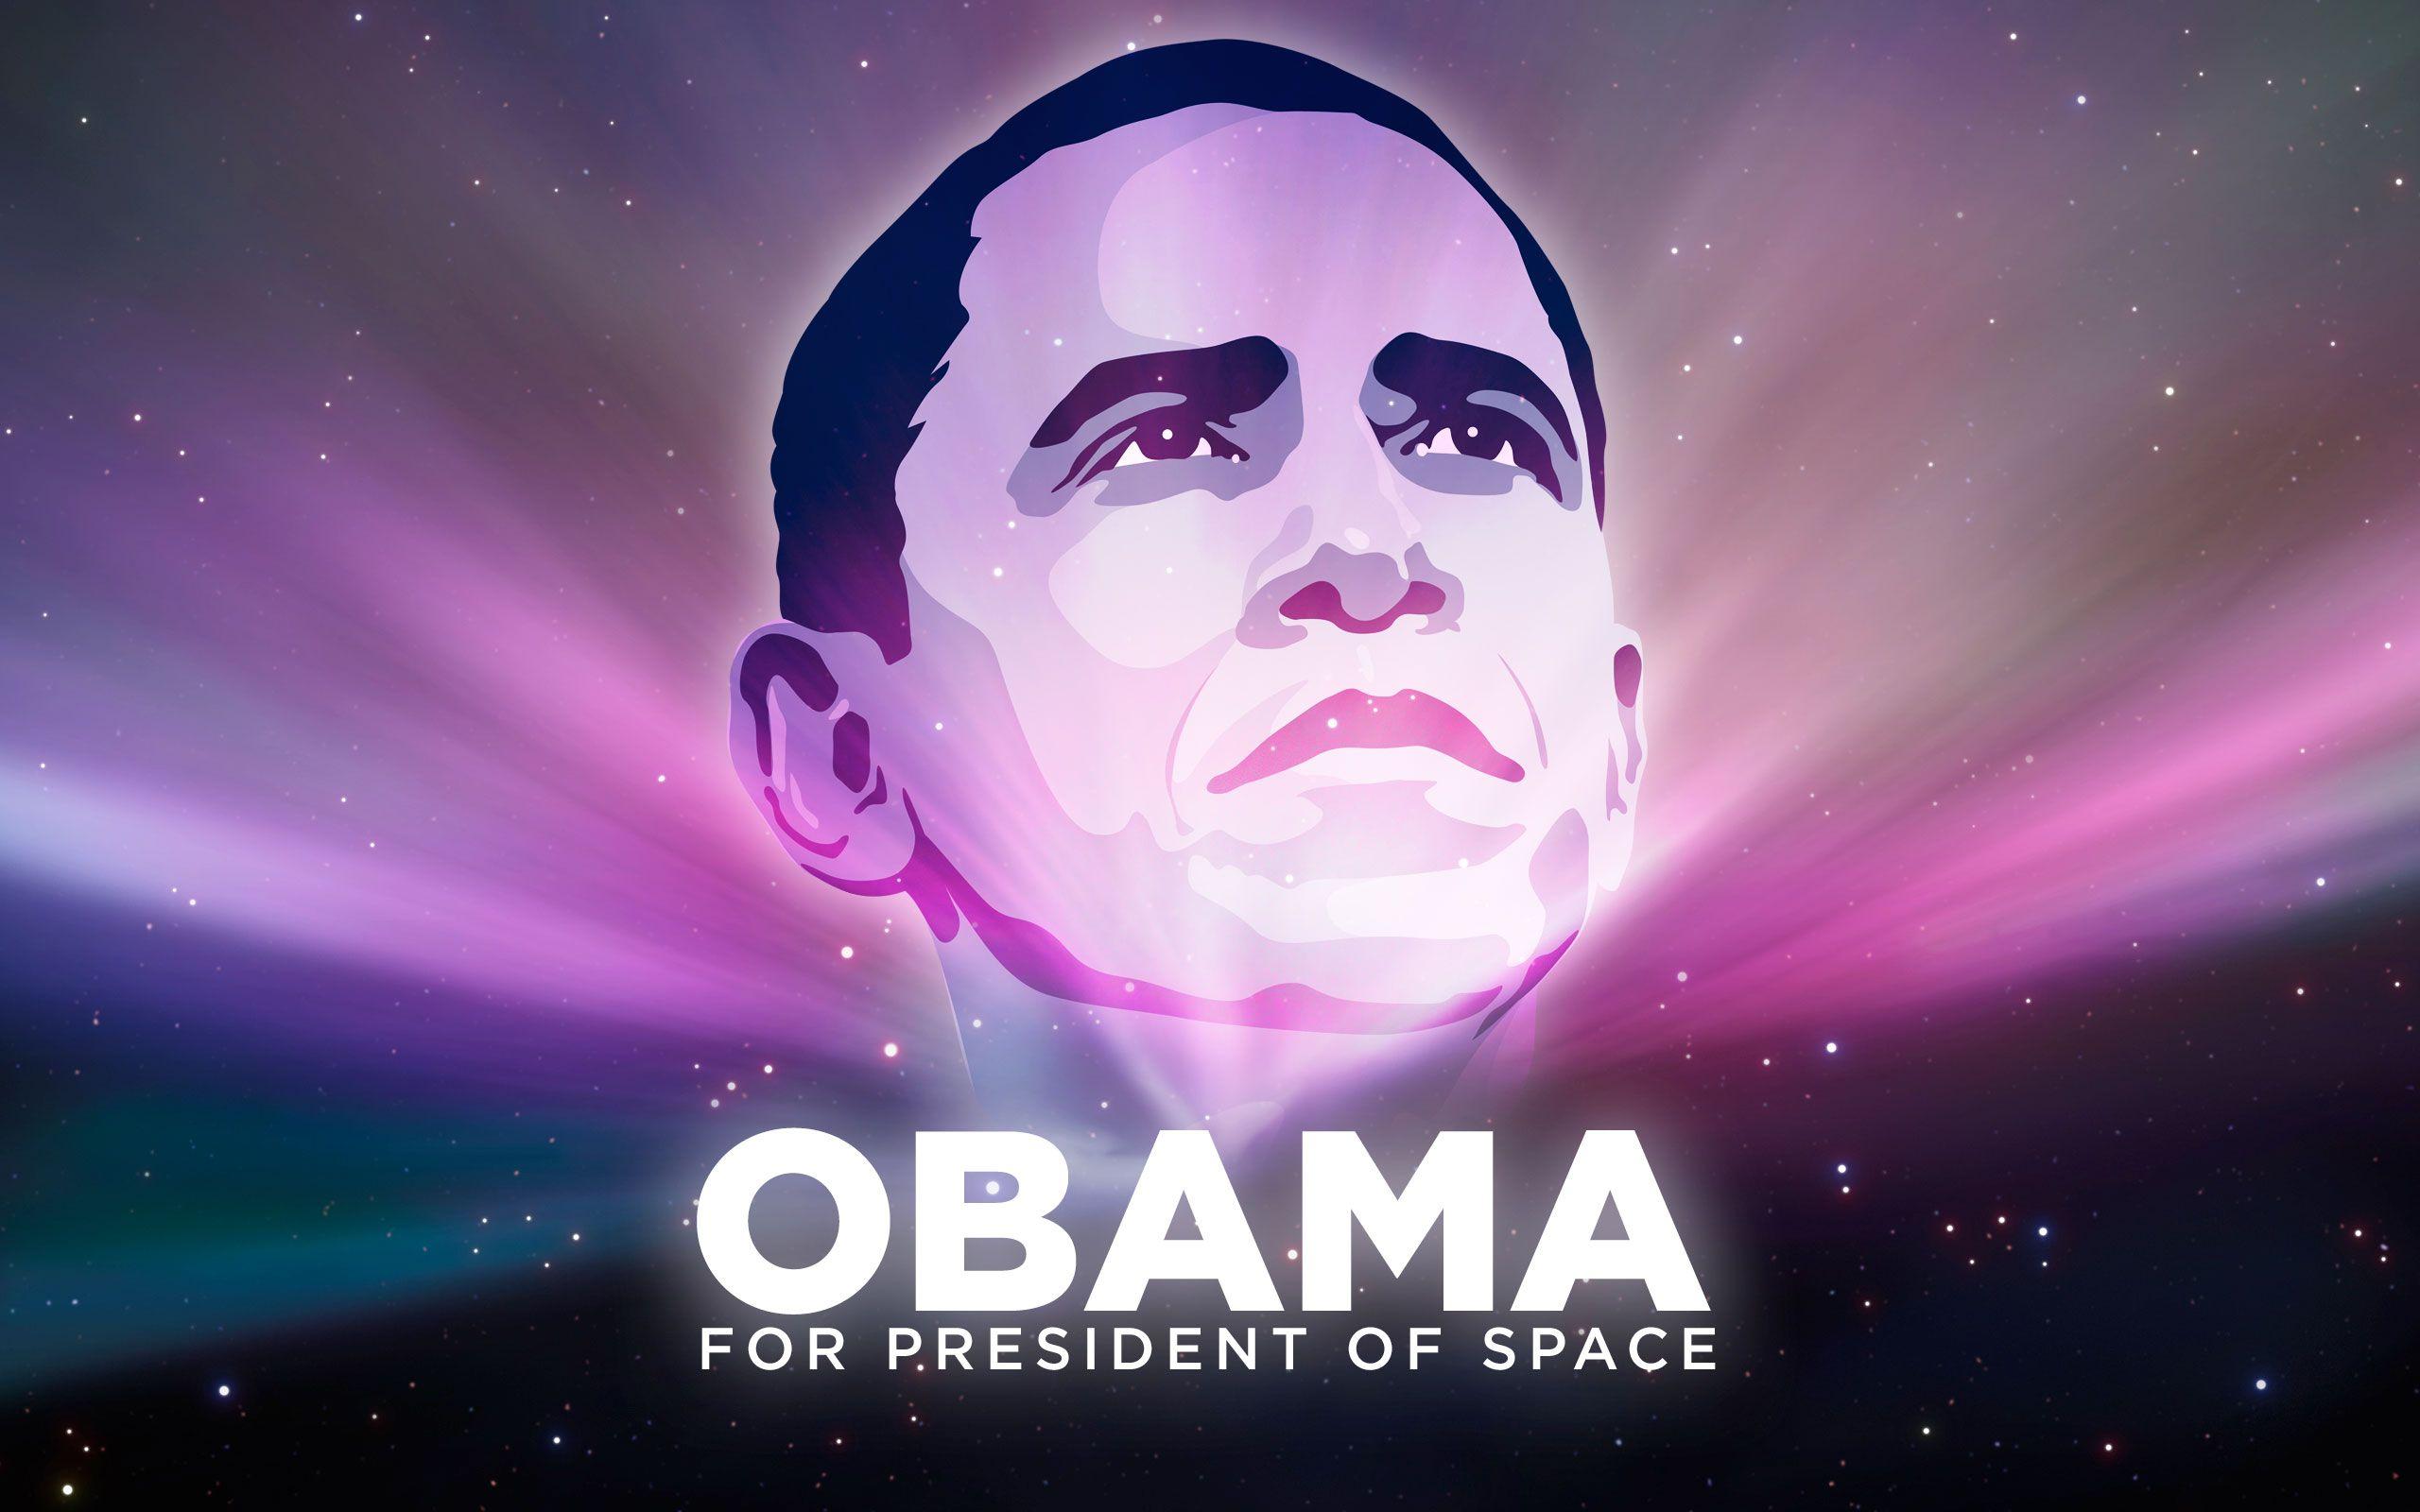 Barack Obama U.S. President wallpaper and image